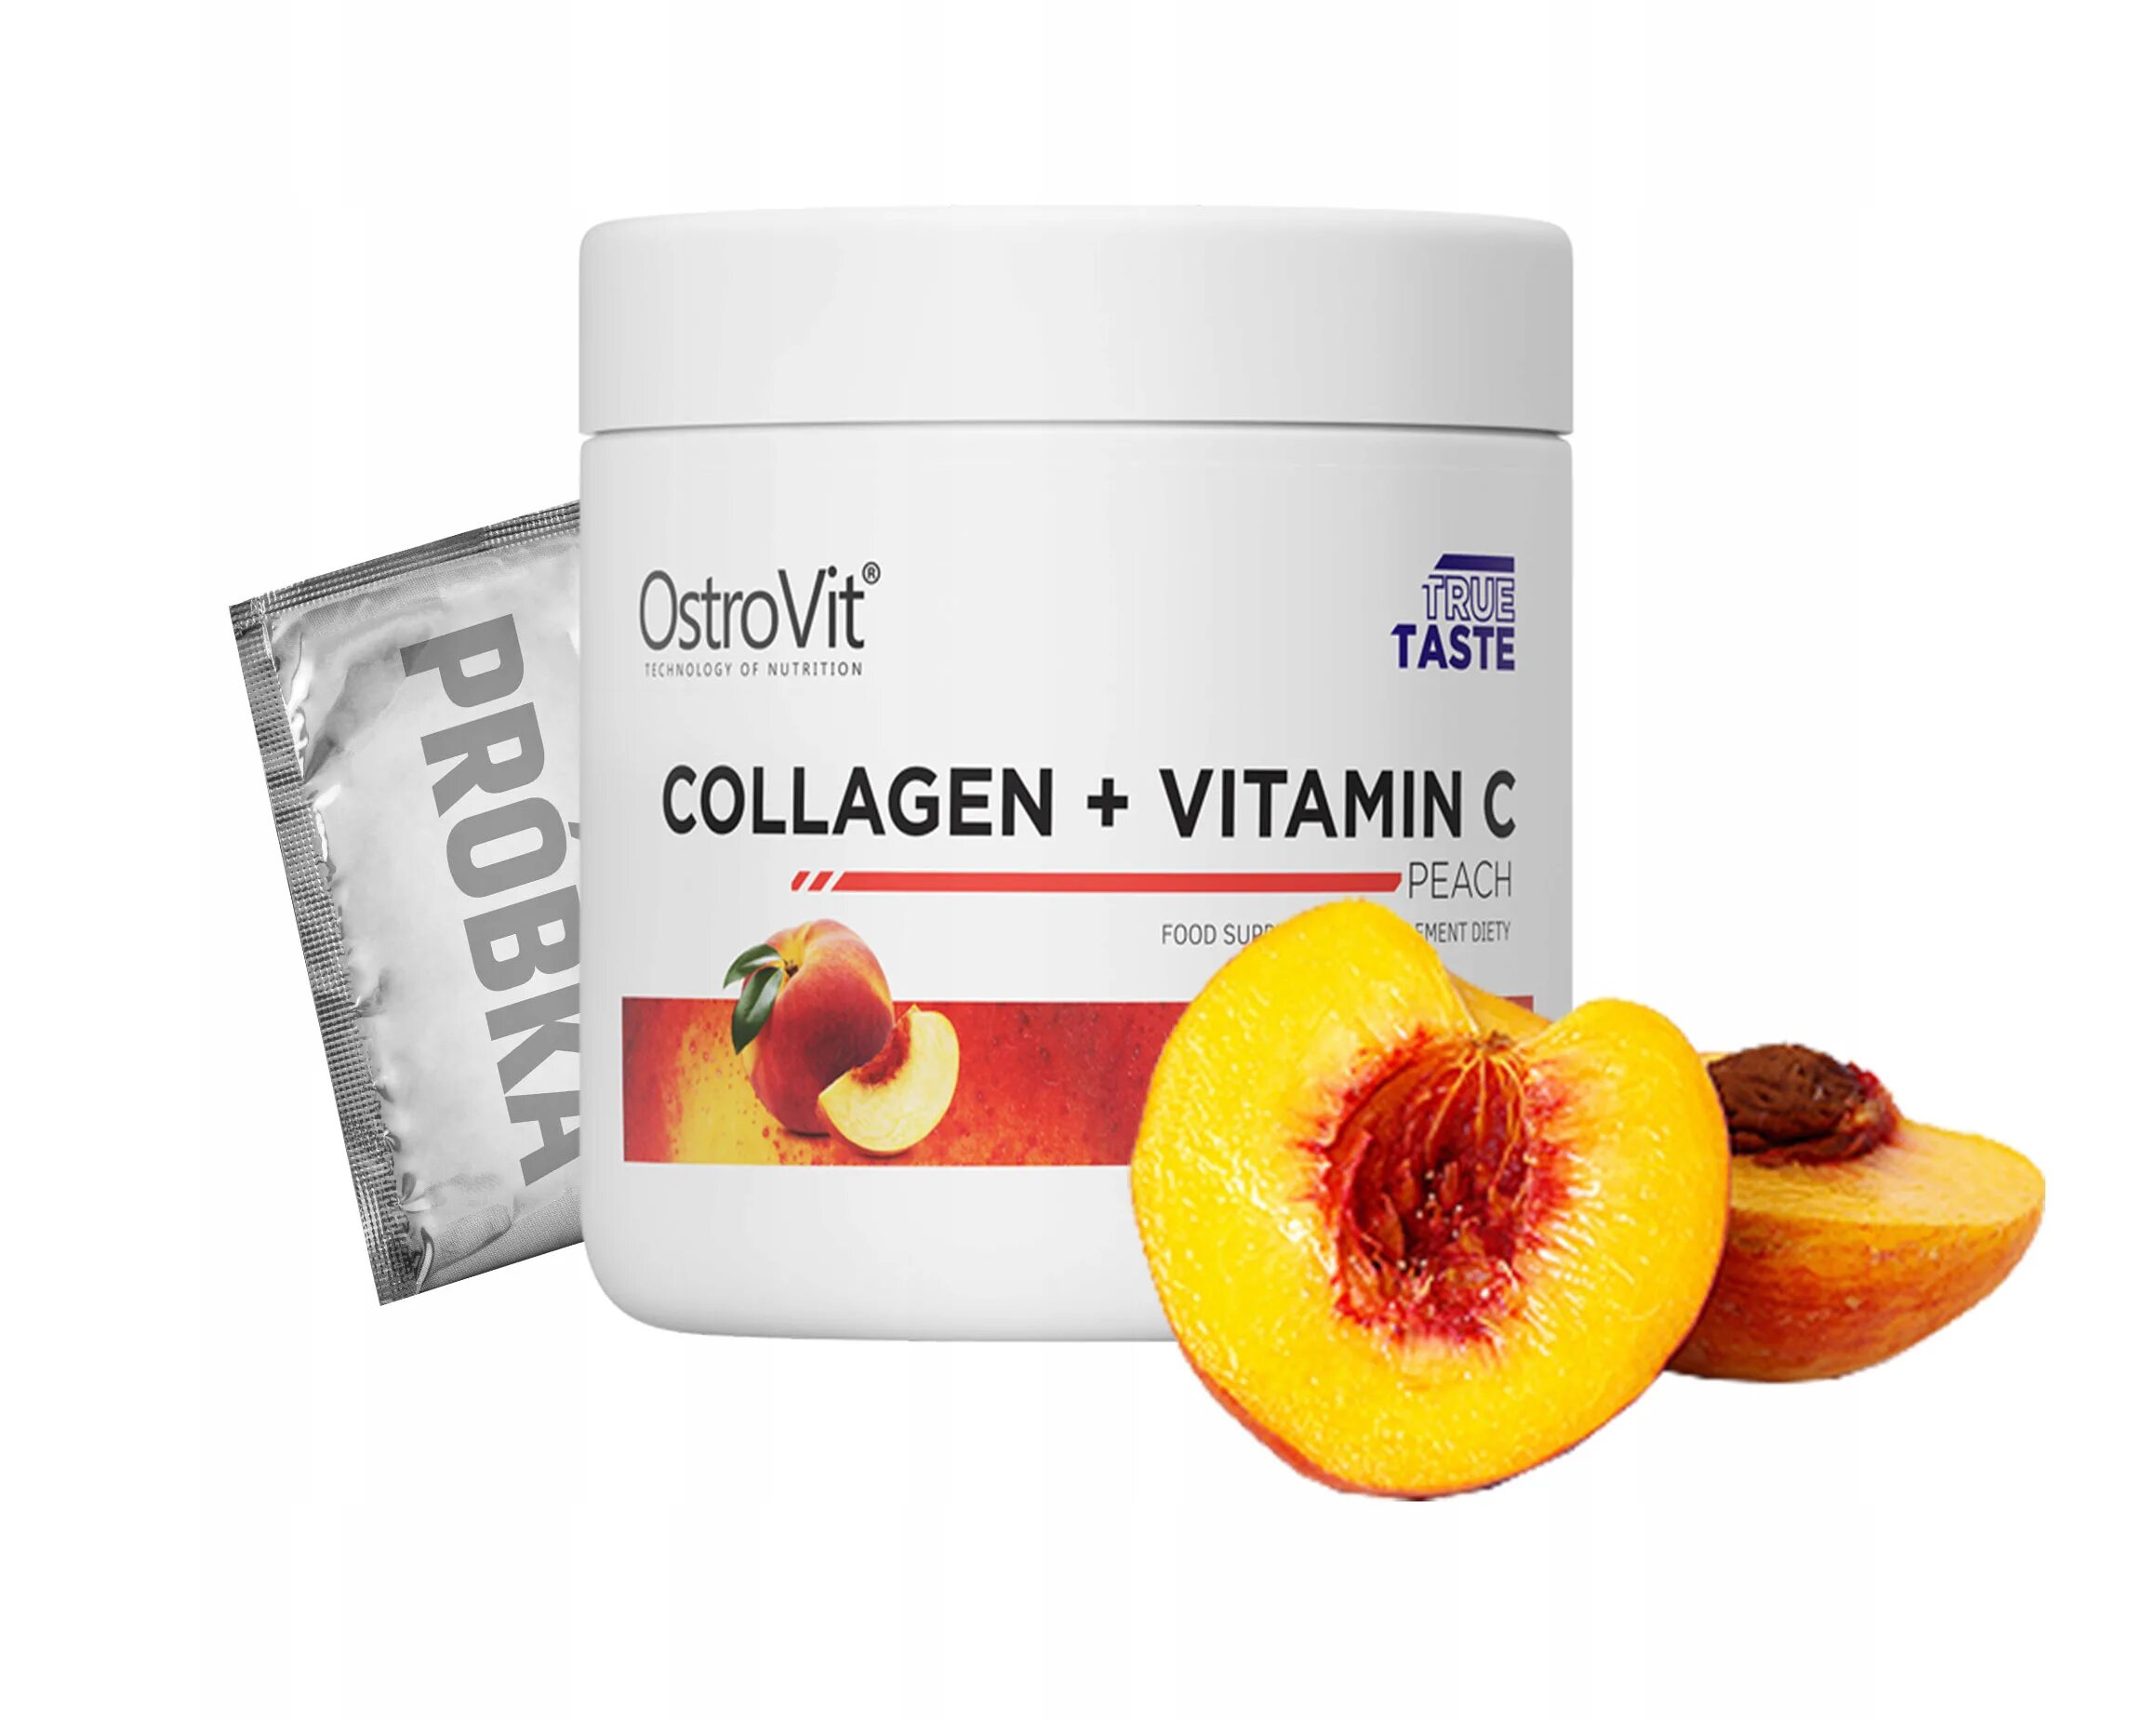 Коллаген OSTROVIT Collagen+Vitamin c. Коллаген OSTROVIT Collagen + Vitamin c 200г персик. Collagen + Vitamin c персик 400g OSTROVIT. "Островит витамин с" ("OSTROVIT Vitamin с") 30 т.. Можно принимать коллаген с витамином с